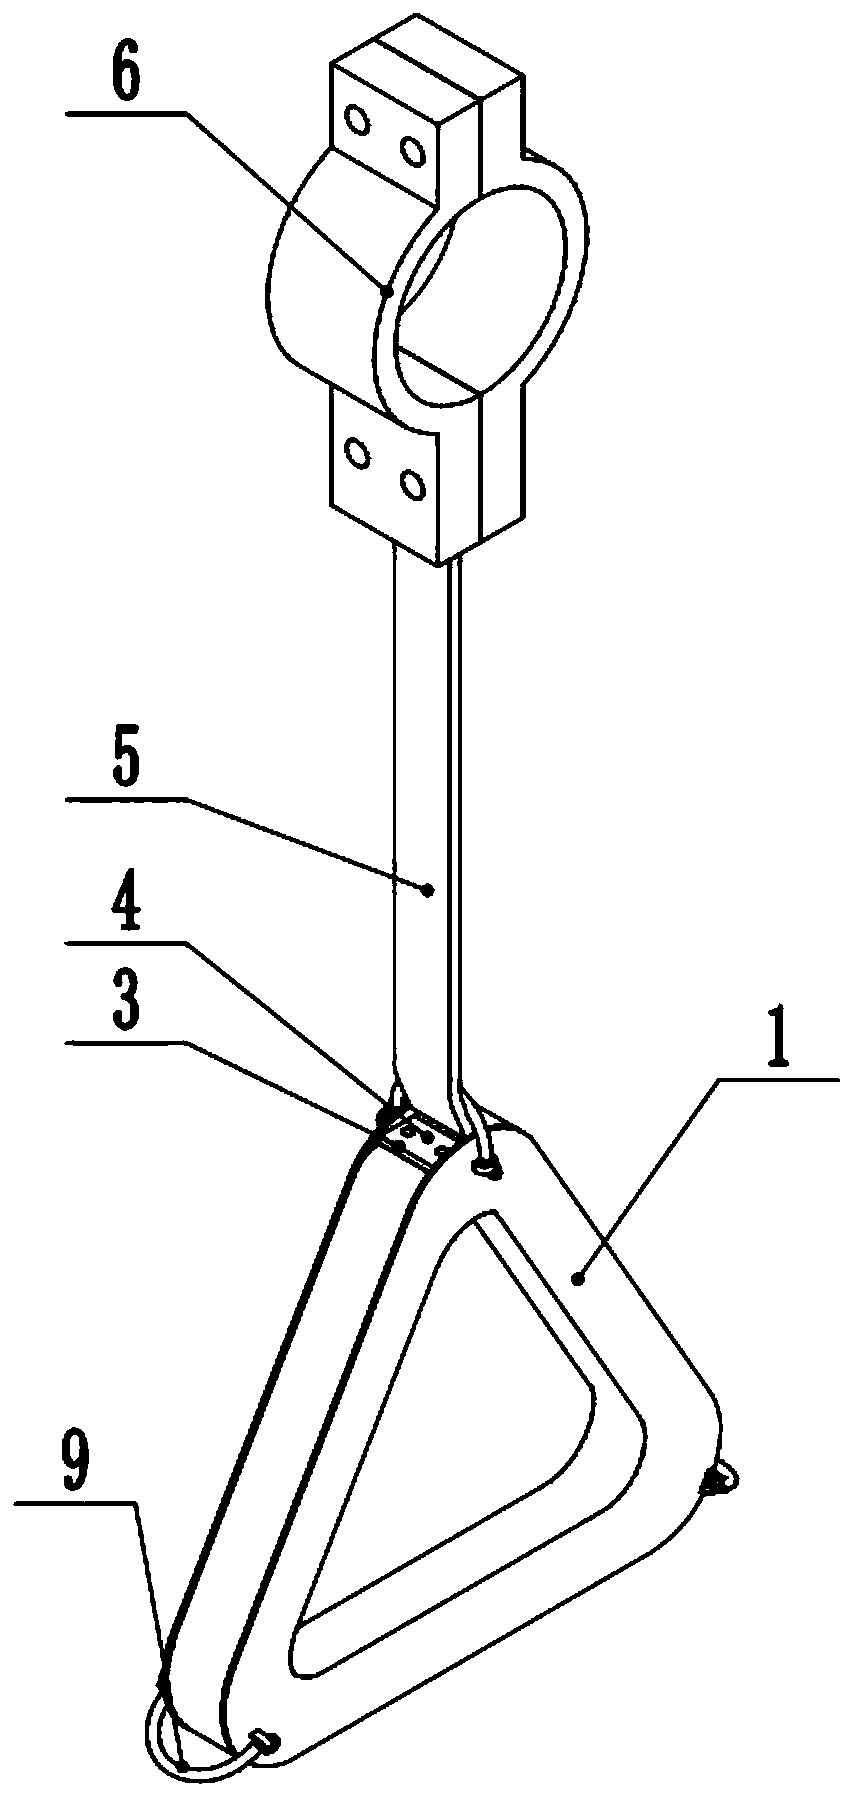 A height-adjustable triangular bus handle